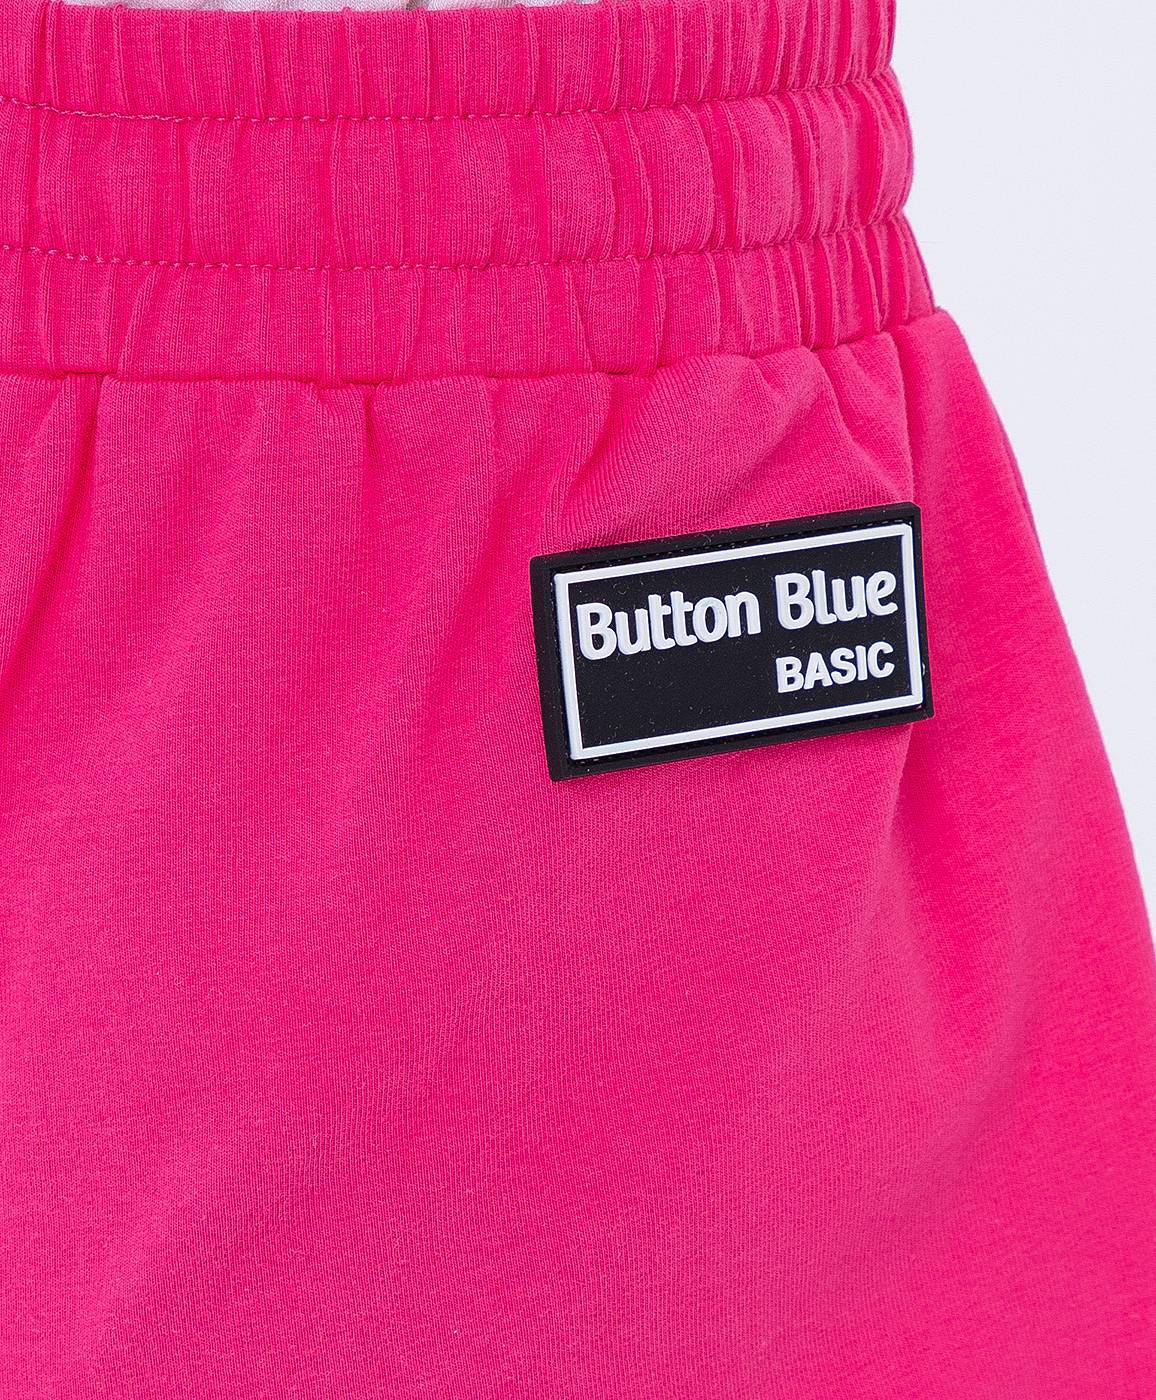 Шорты розовые Button Blue 122BBGB54013600, размер 128, цвет розовый - фото 4